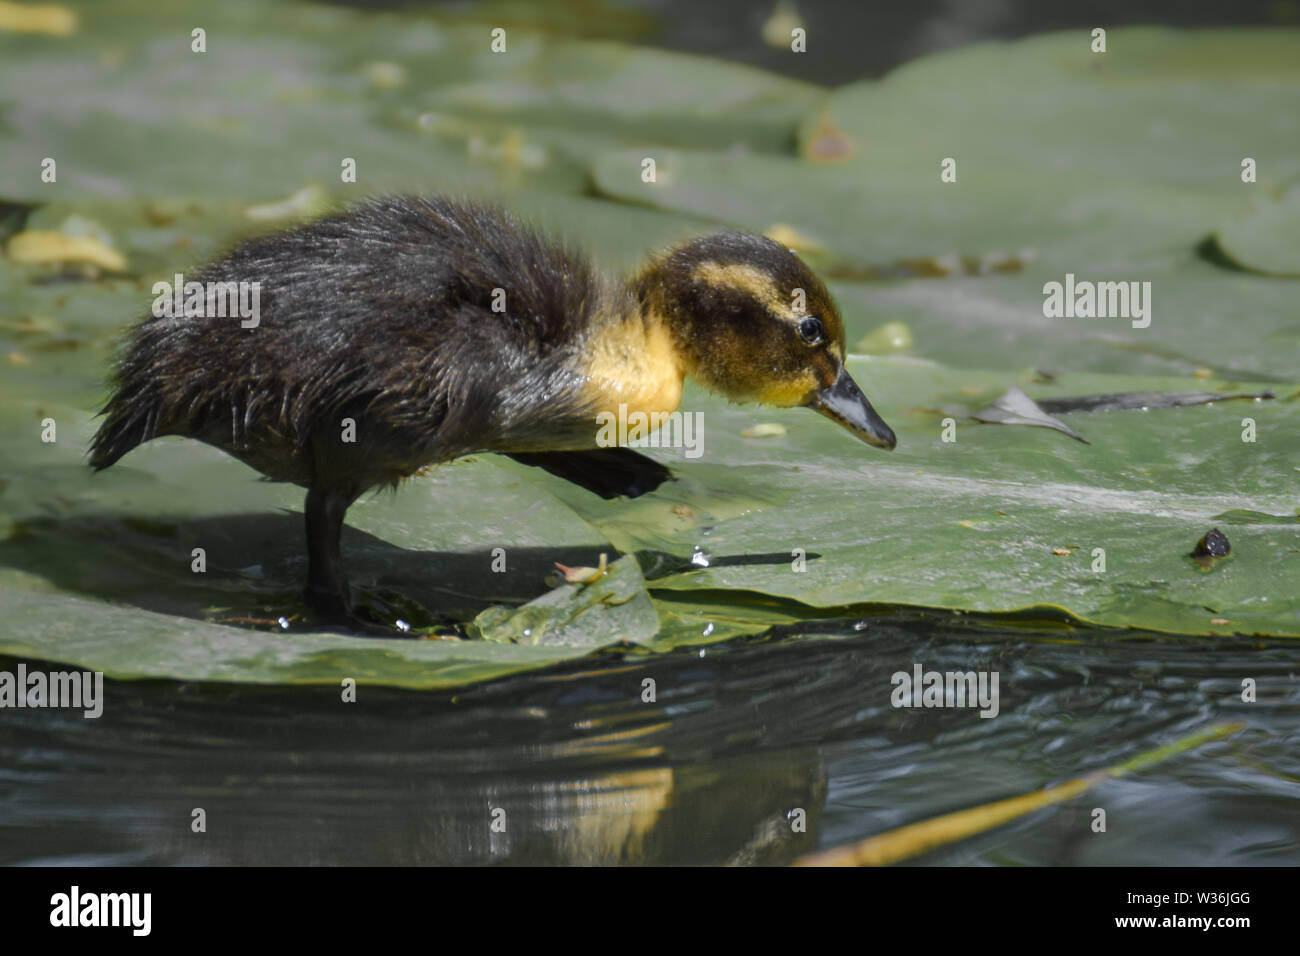 Adorable duckling walking over waterplants Stock Photo